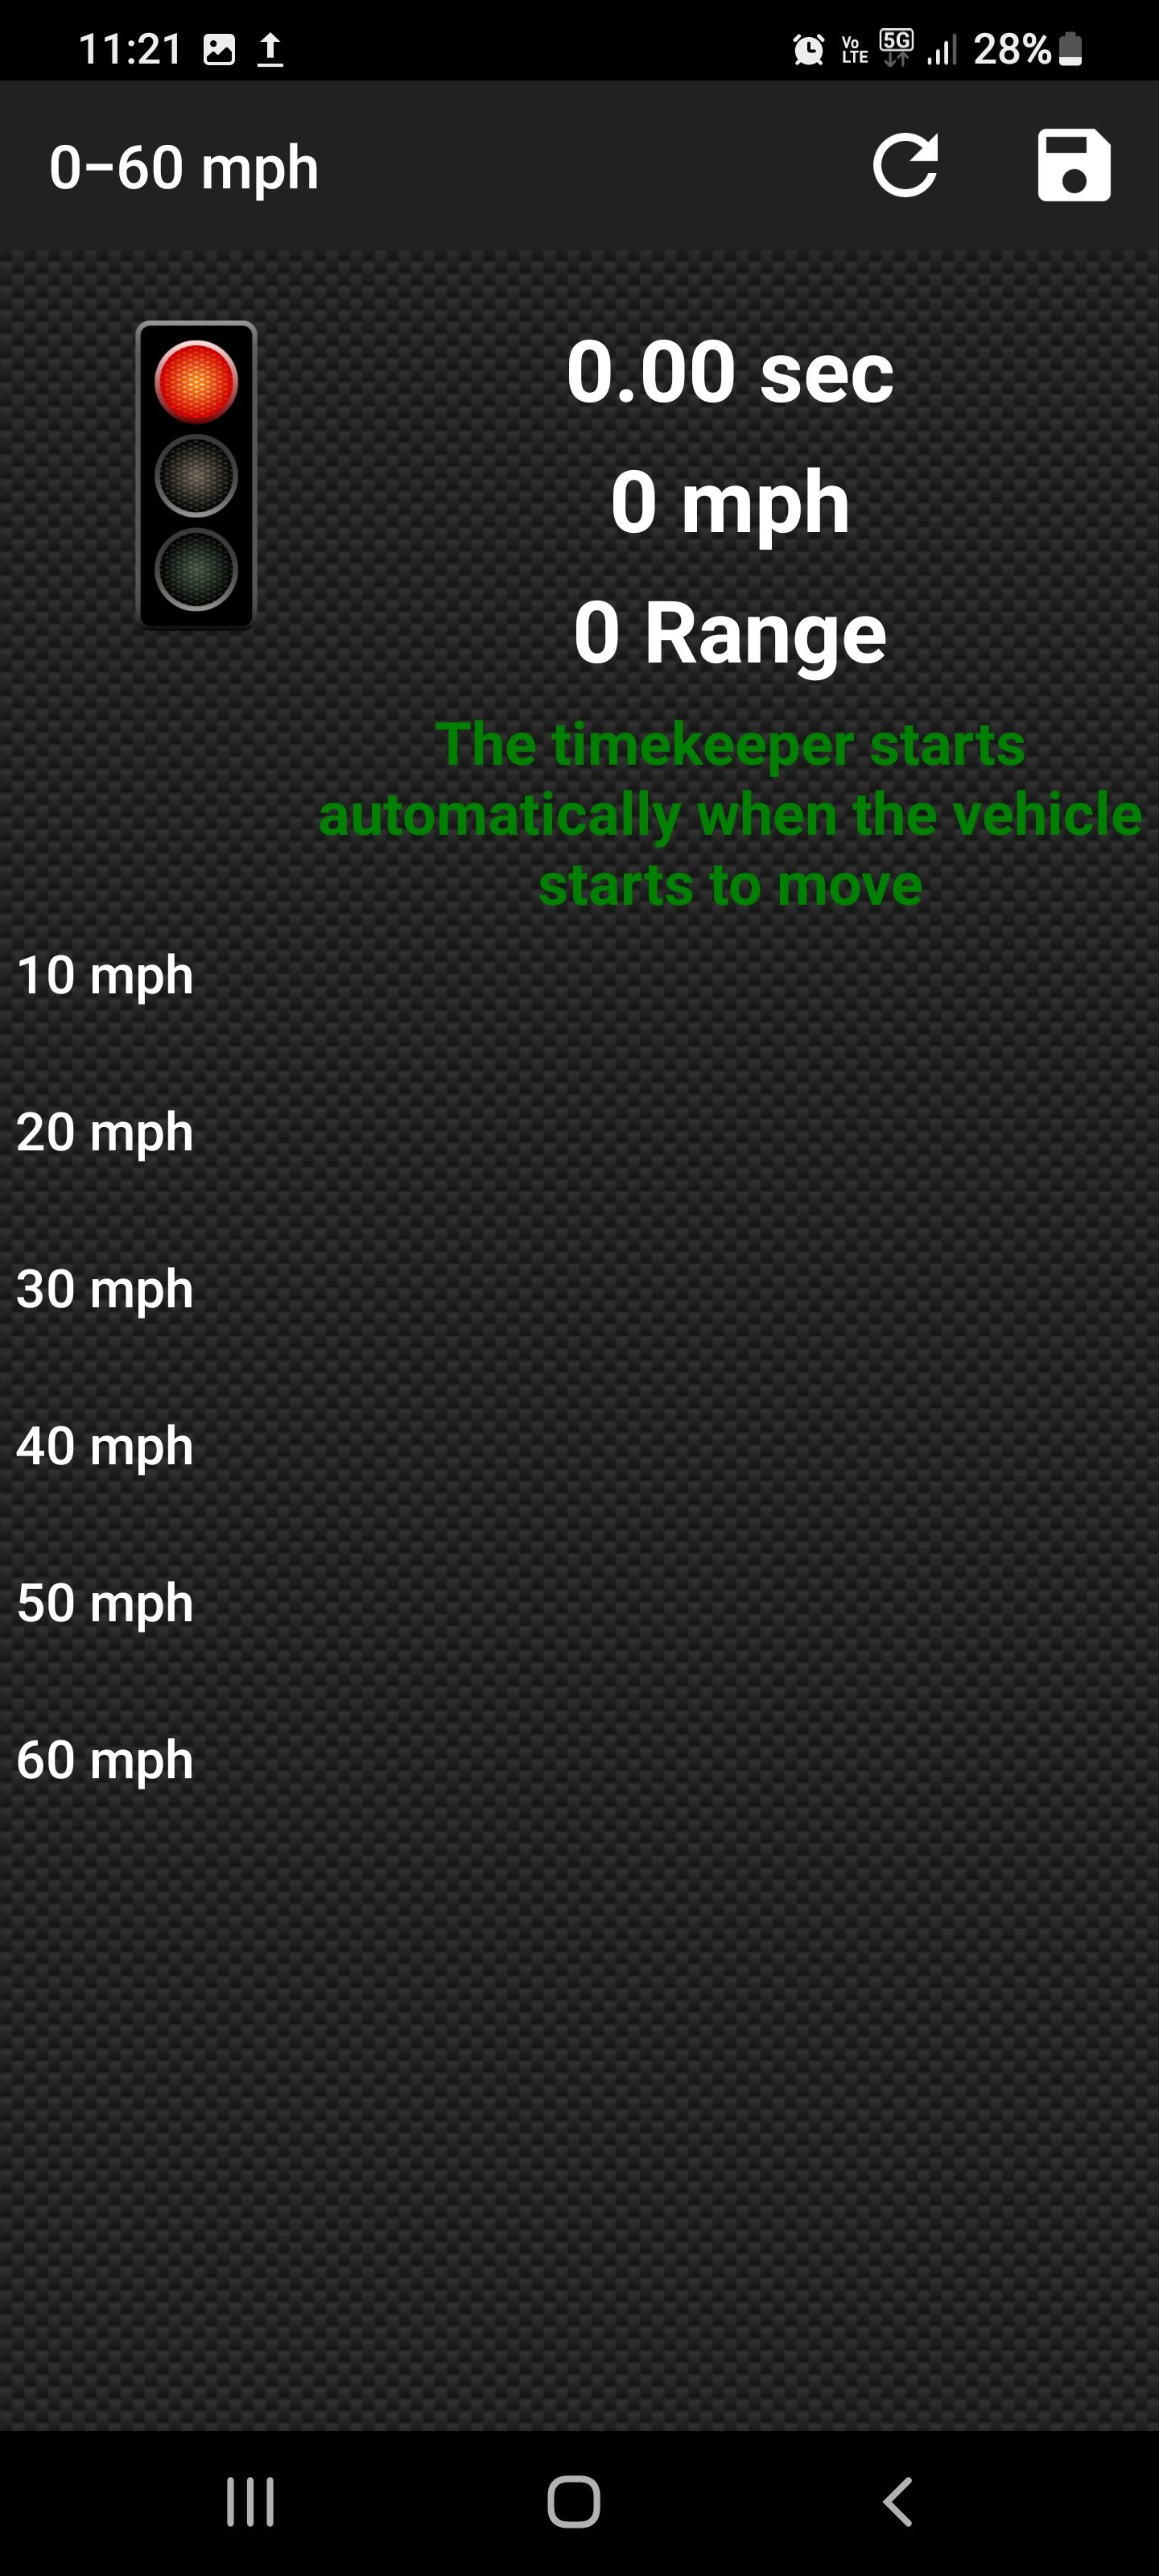 Screenshot of EOBD Facile app showing 0-60 mph test window